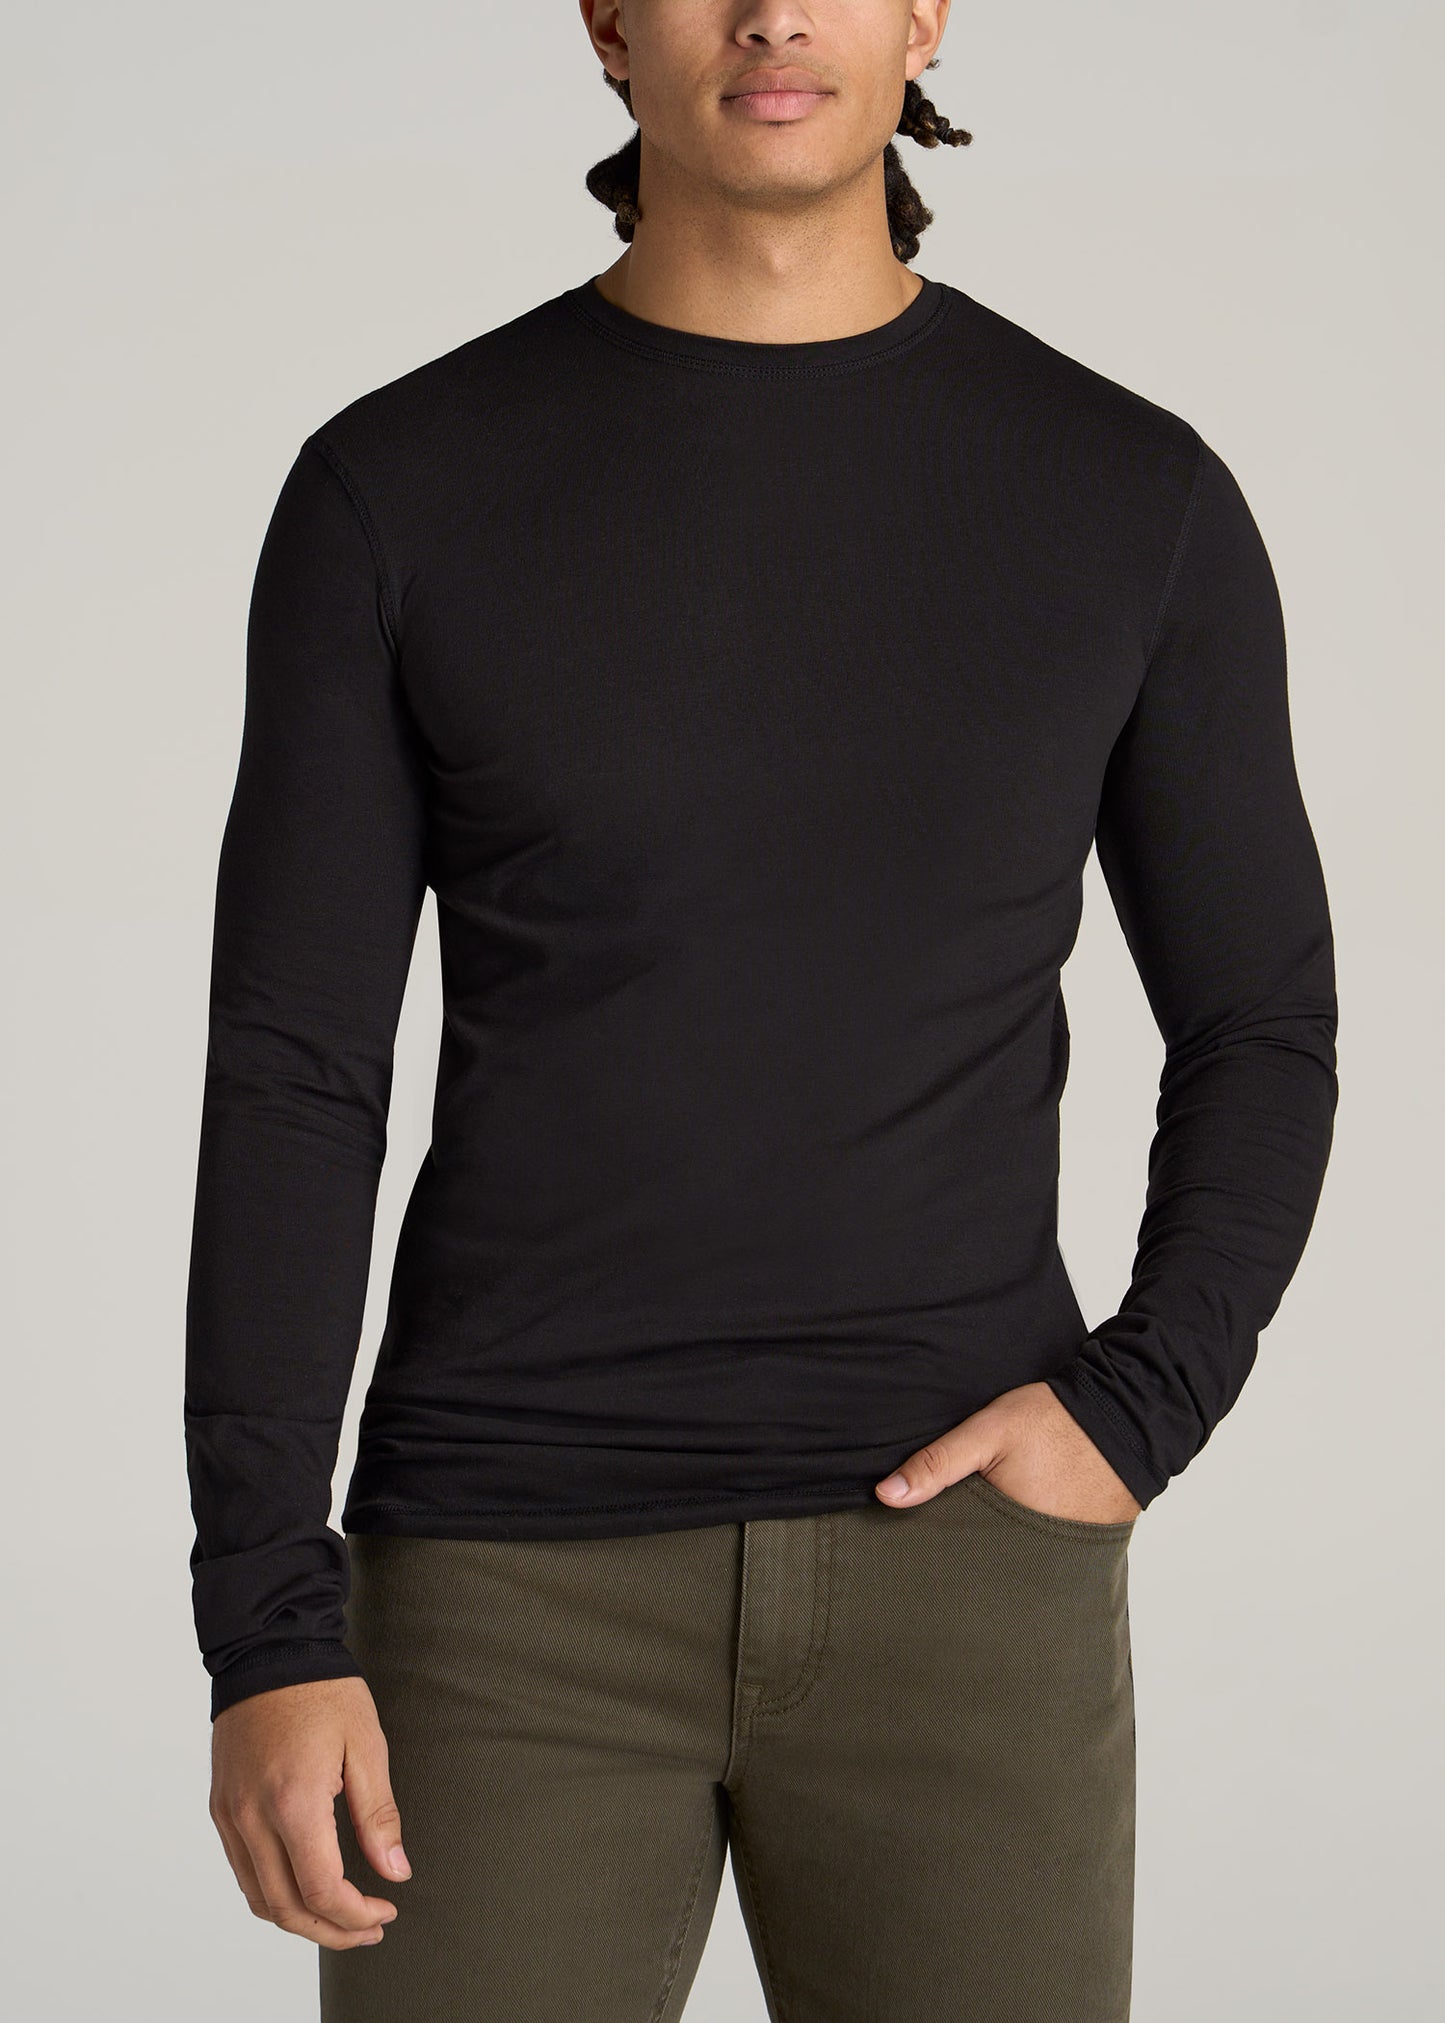 Doller men oversize tshirt ,men's half sleeve tshirt , gym tshirt thin and  super soft fabric